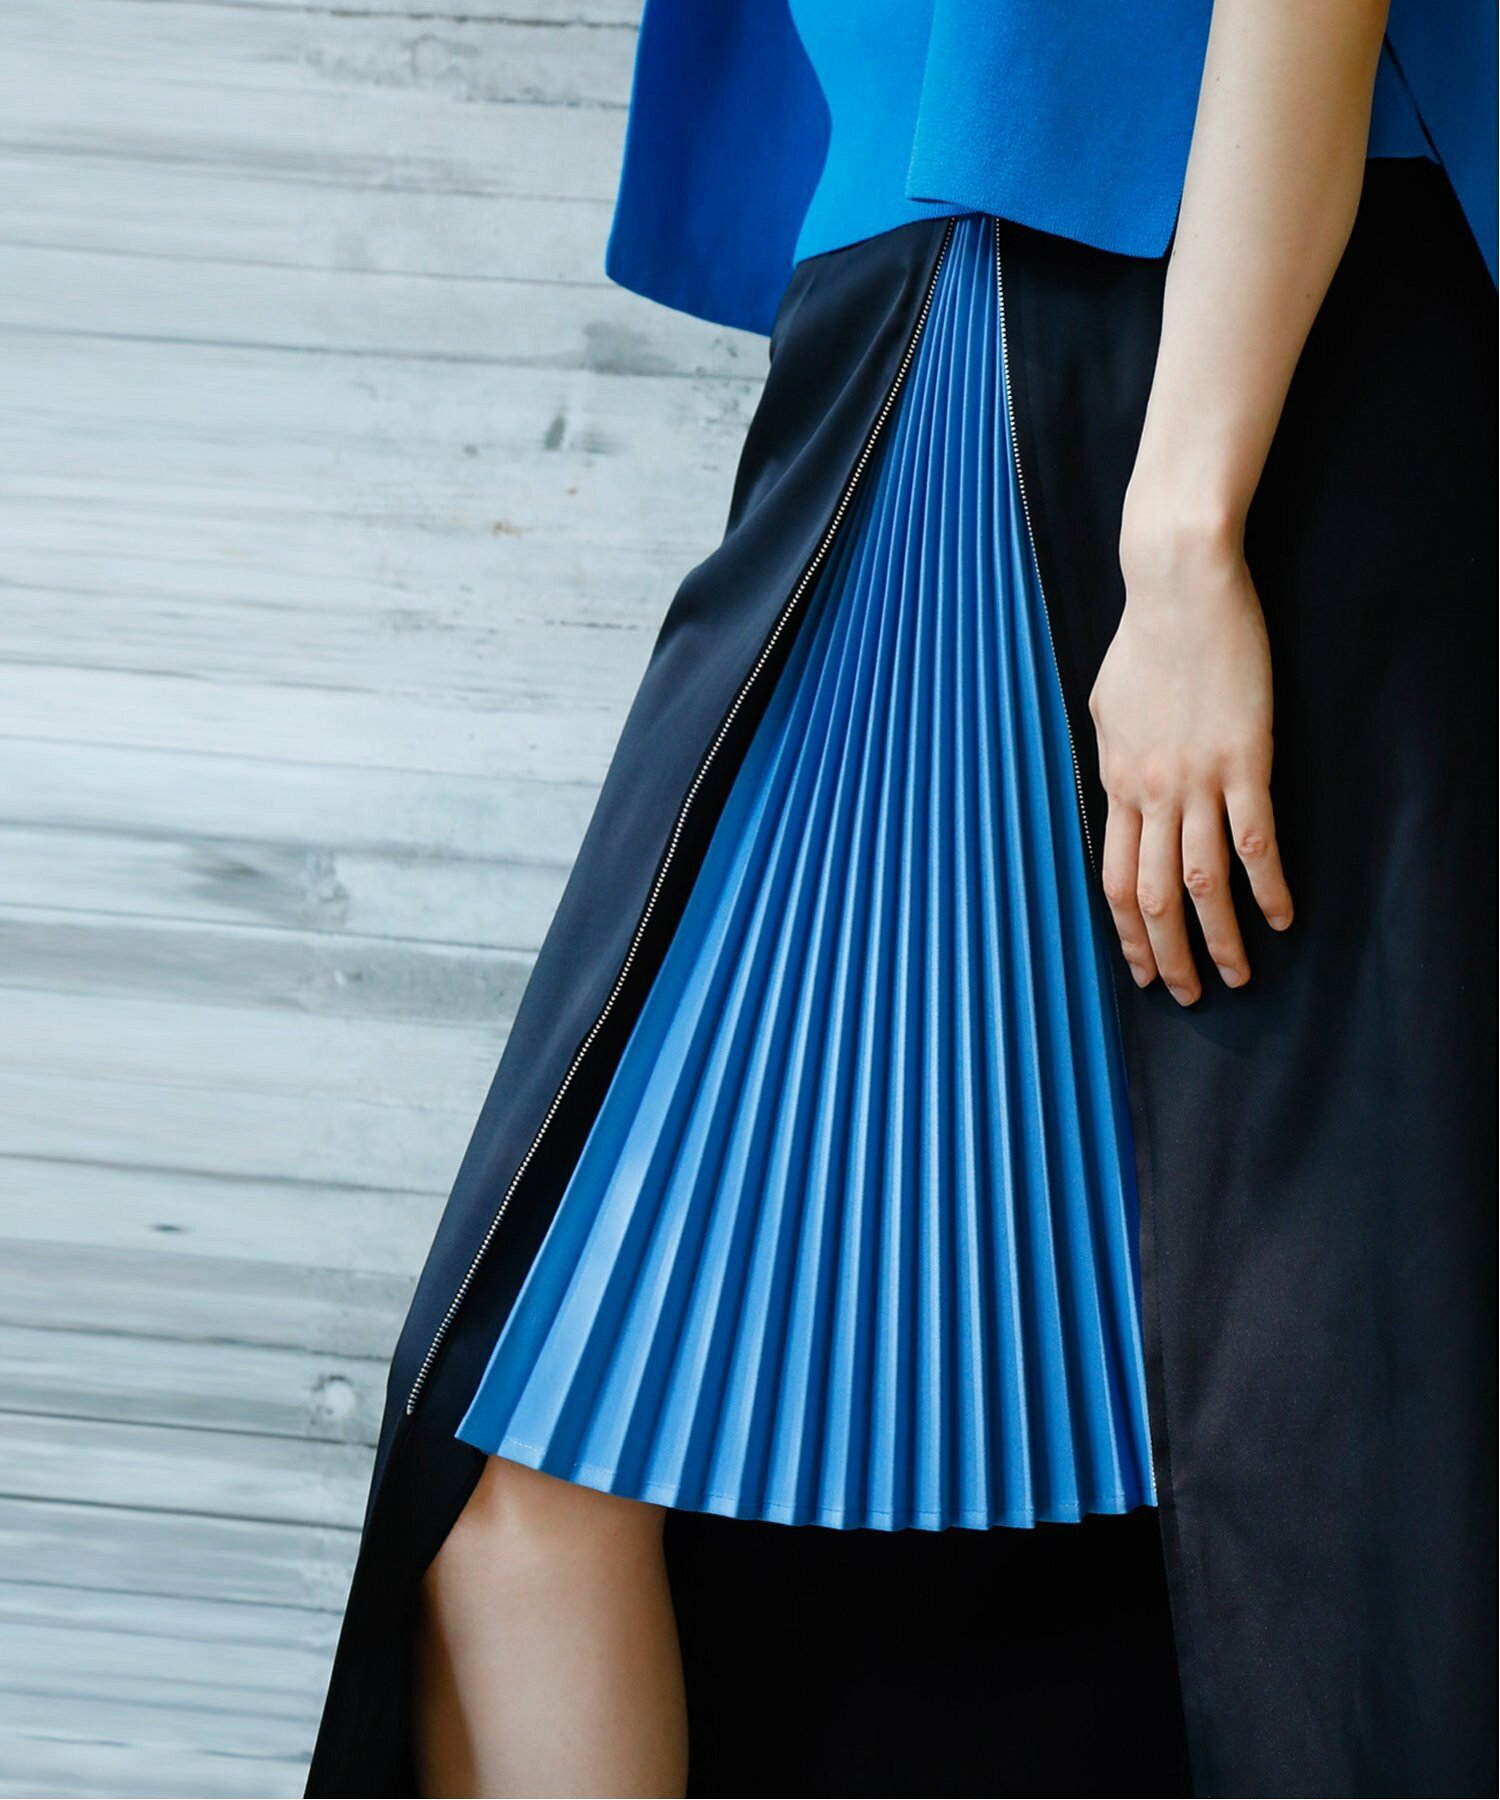 LE CIEL BLEU/カラーブロックプリーツインサートスカート / Color Block Pleated Insert Skirt